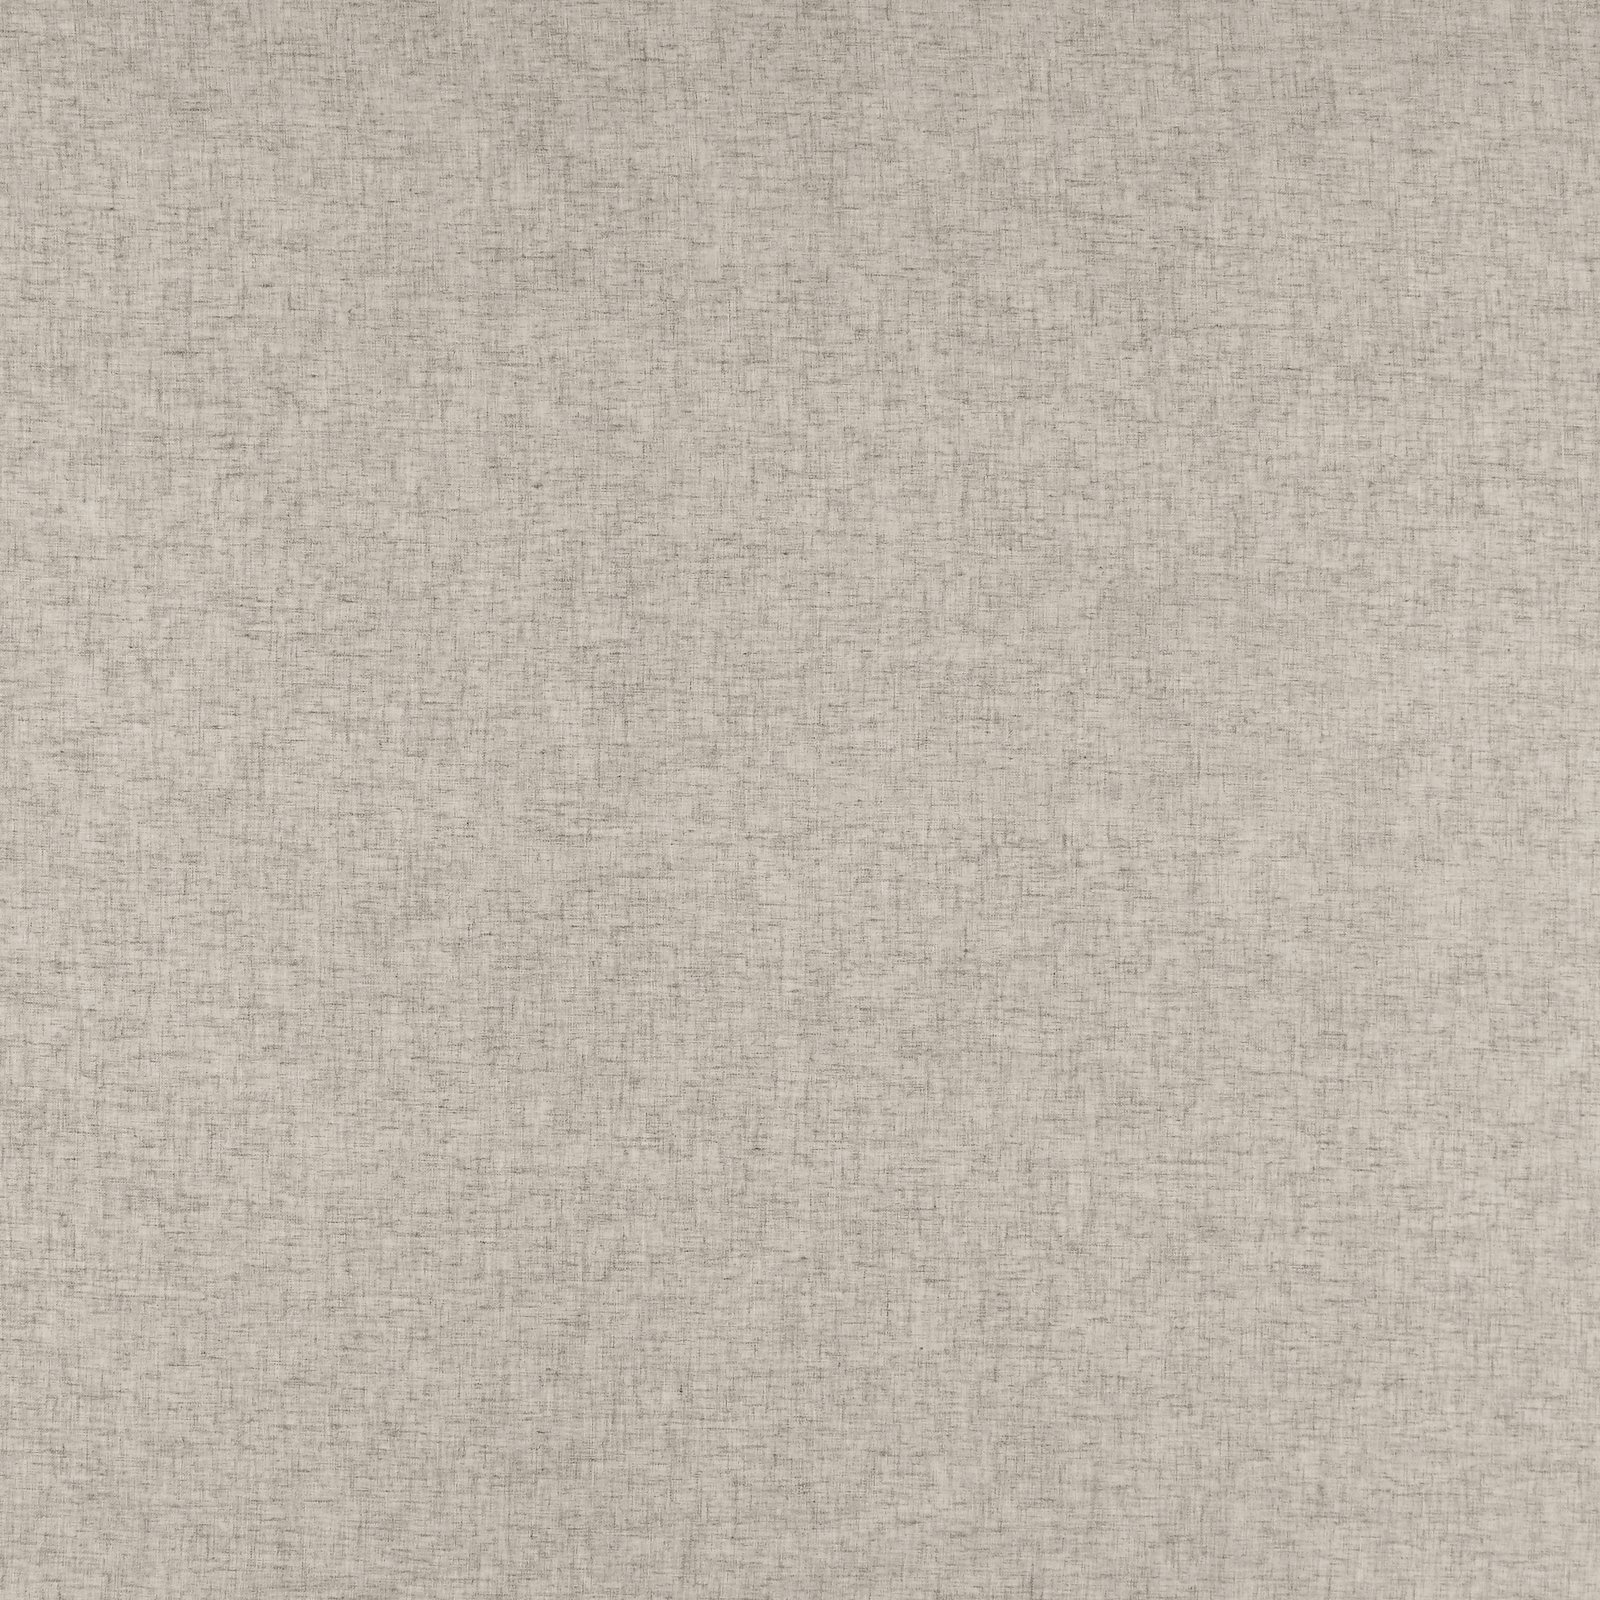 Voile light warm grey polyester/linen blend 835168_pack_solid